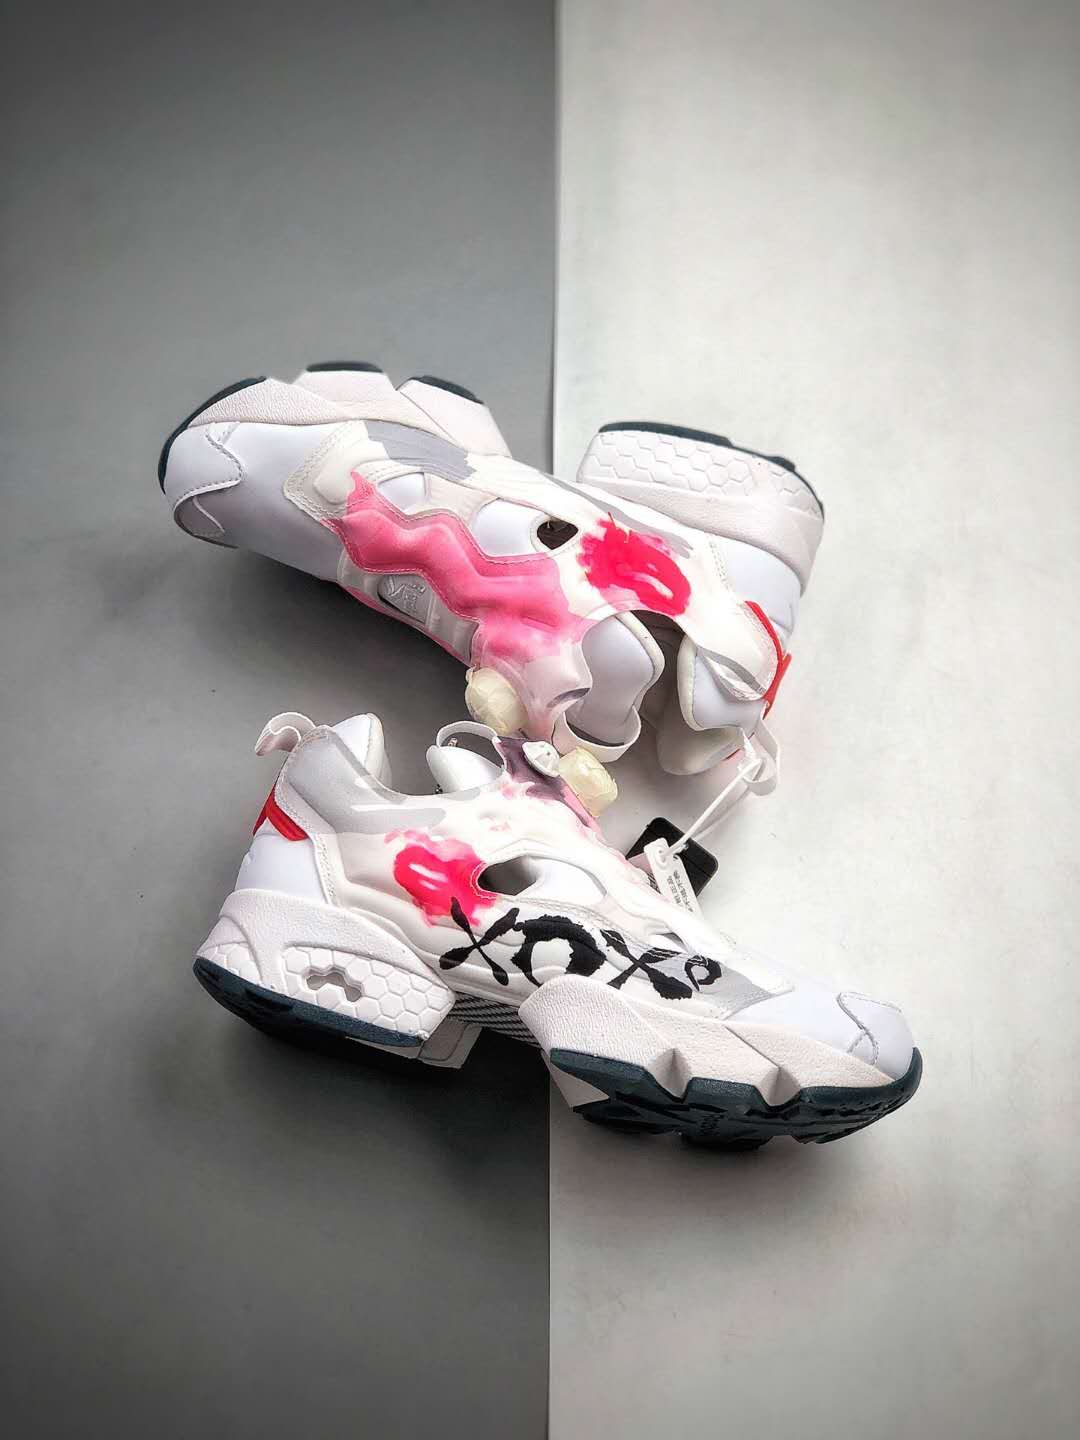 Reebok InstaPump Fury Celebrate XOXO V69142 - Get the Hottest Sneaker Now!